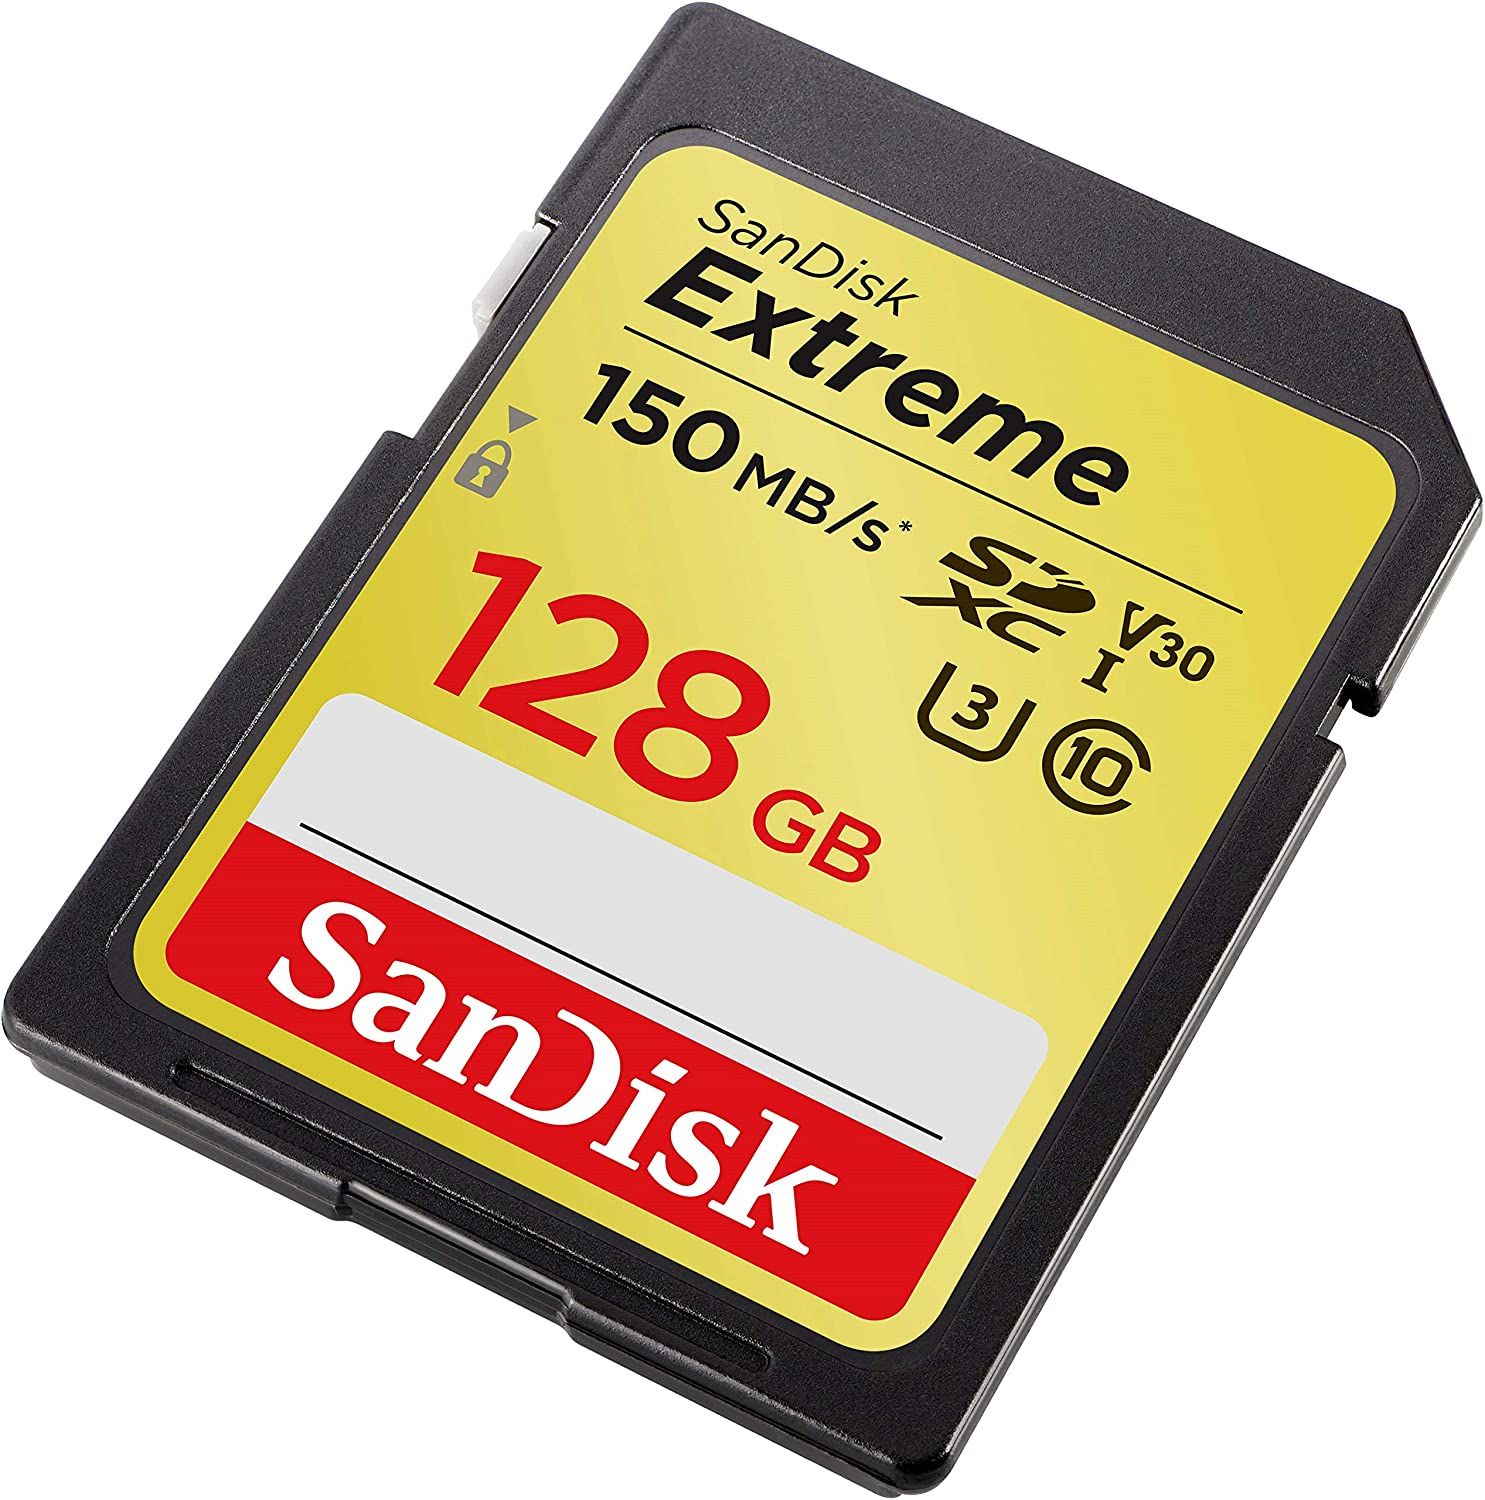 SanDisk-SDSDXV5-SD-Card-3